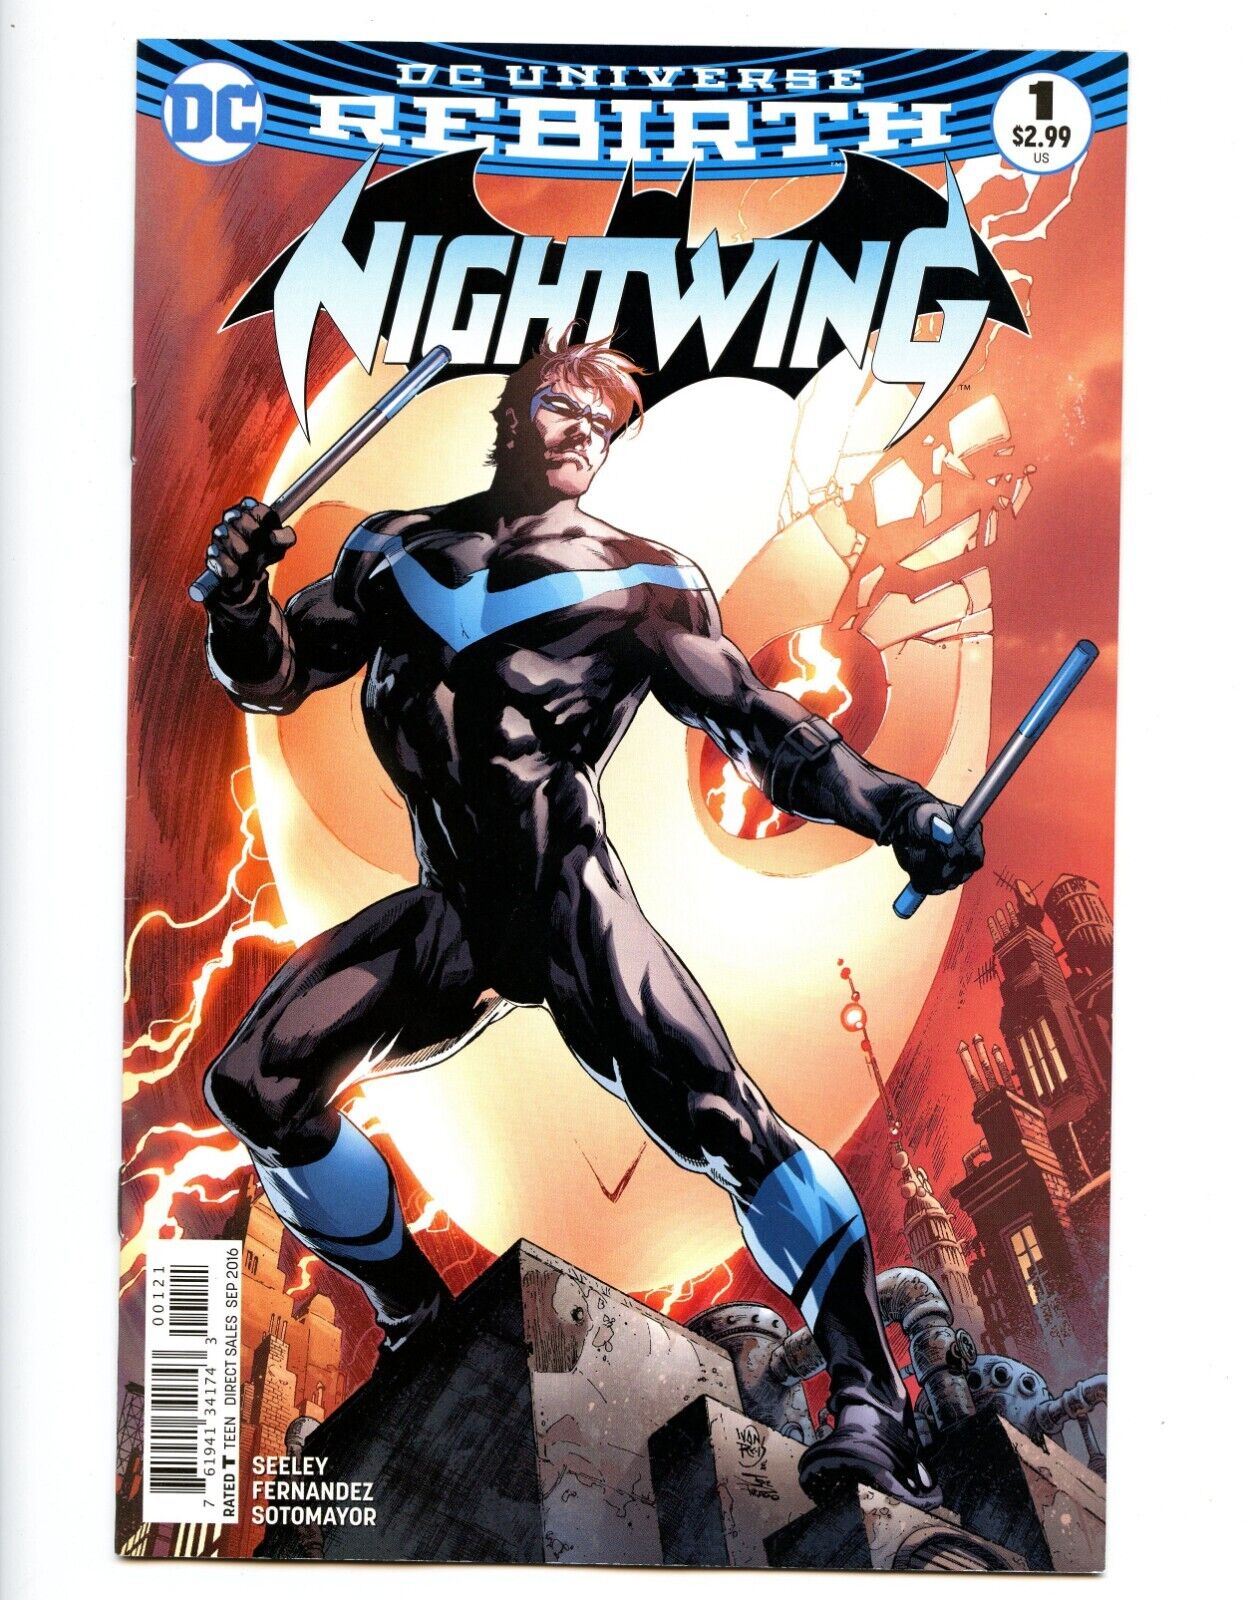 Nightwing ~ No. 1, Sept. 2016 ~ First Print Cover B ~ DC Universe Rebirth ~ VF